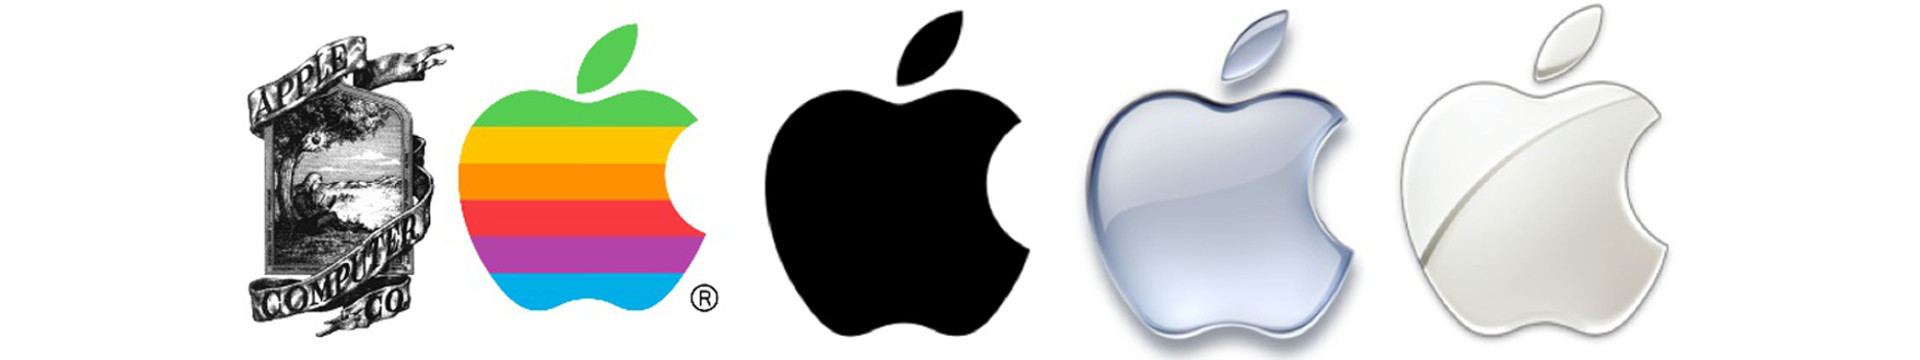 Razernij Plagen Intensief Apple registreert oud logo - Chiever